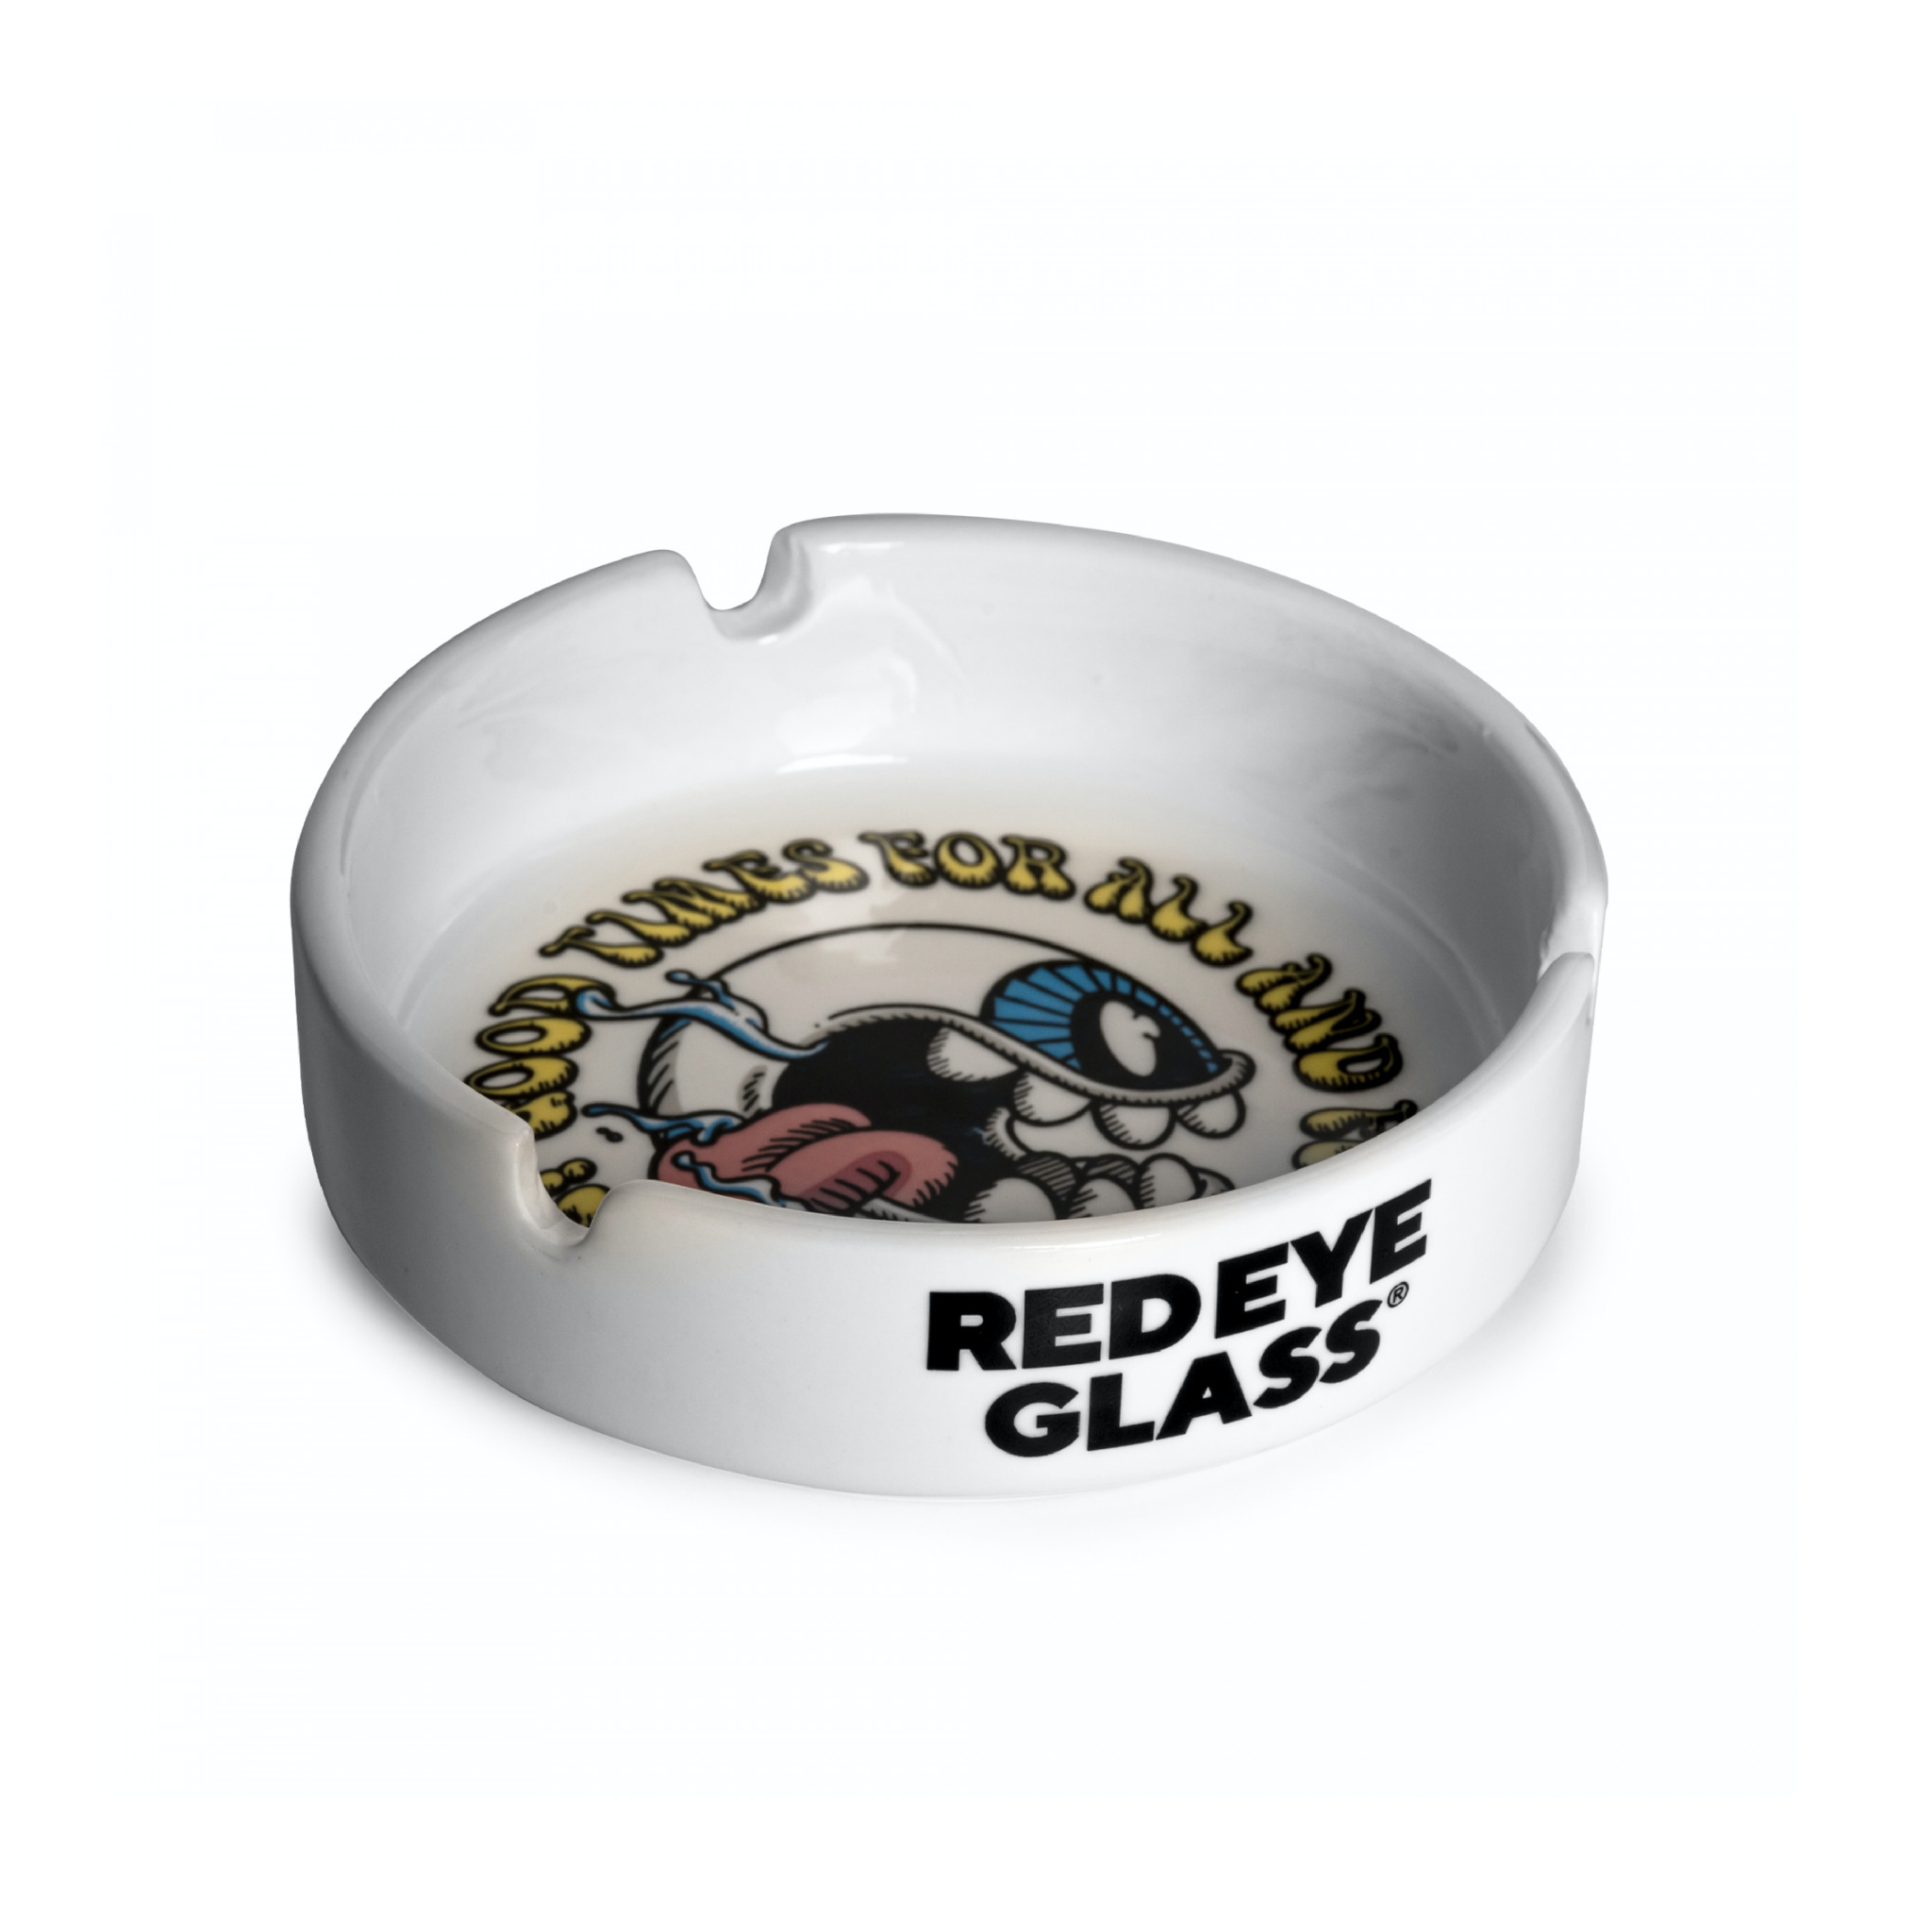 Red Eye Glass® 'Good Times' Ceramic Ashtray